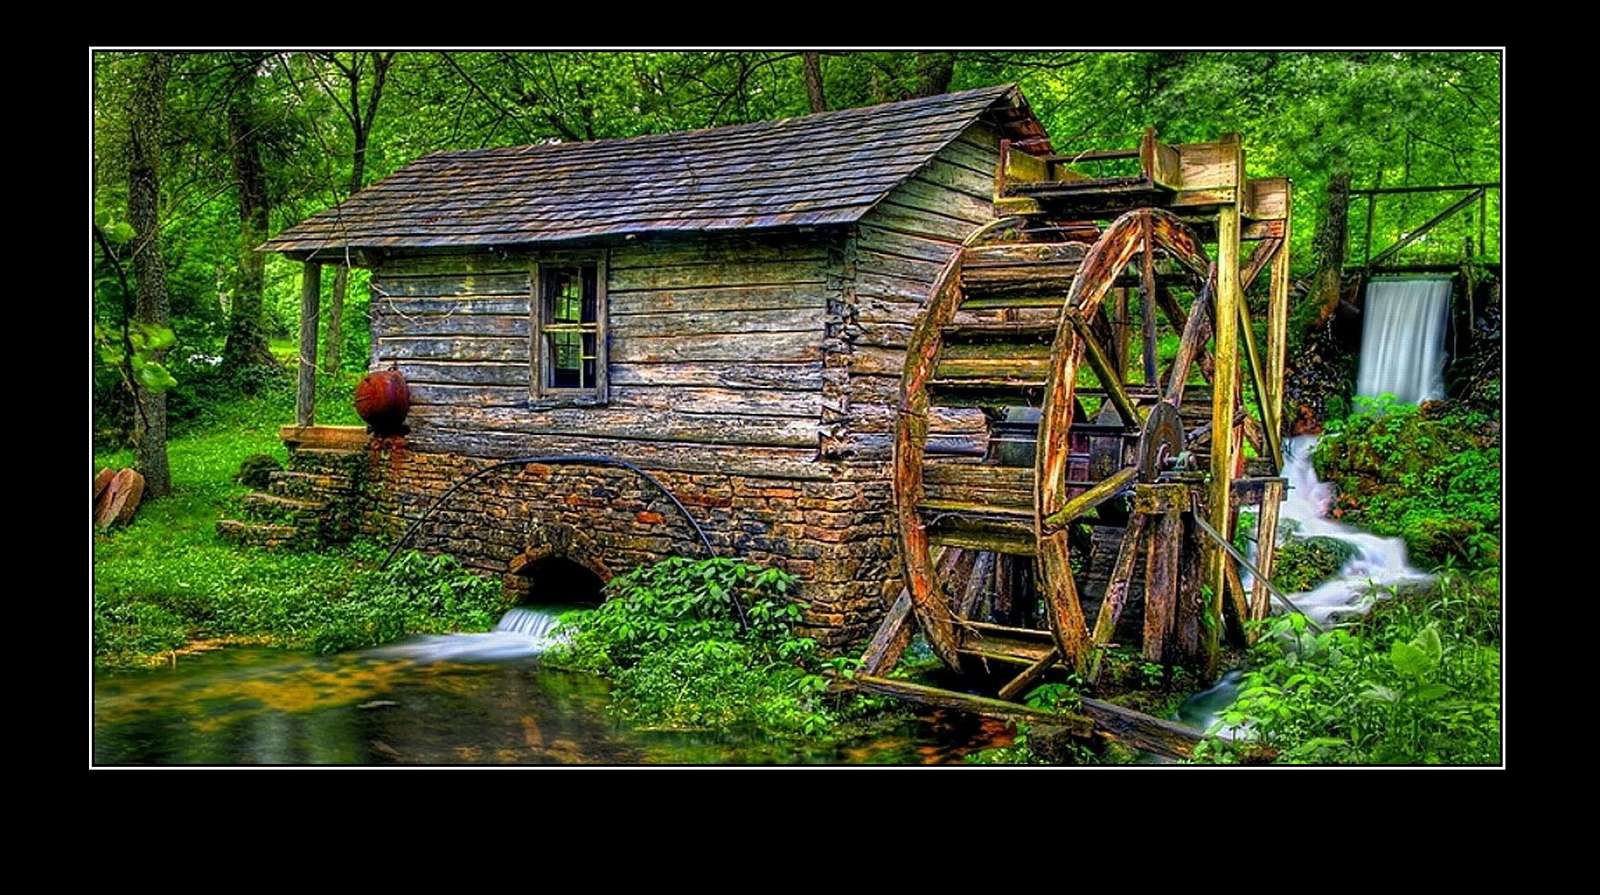 Watermill in a beautiful envir online puzzle